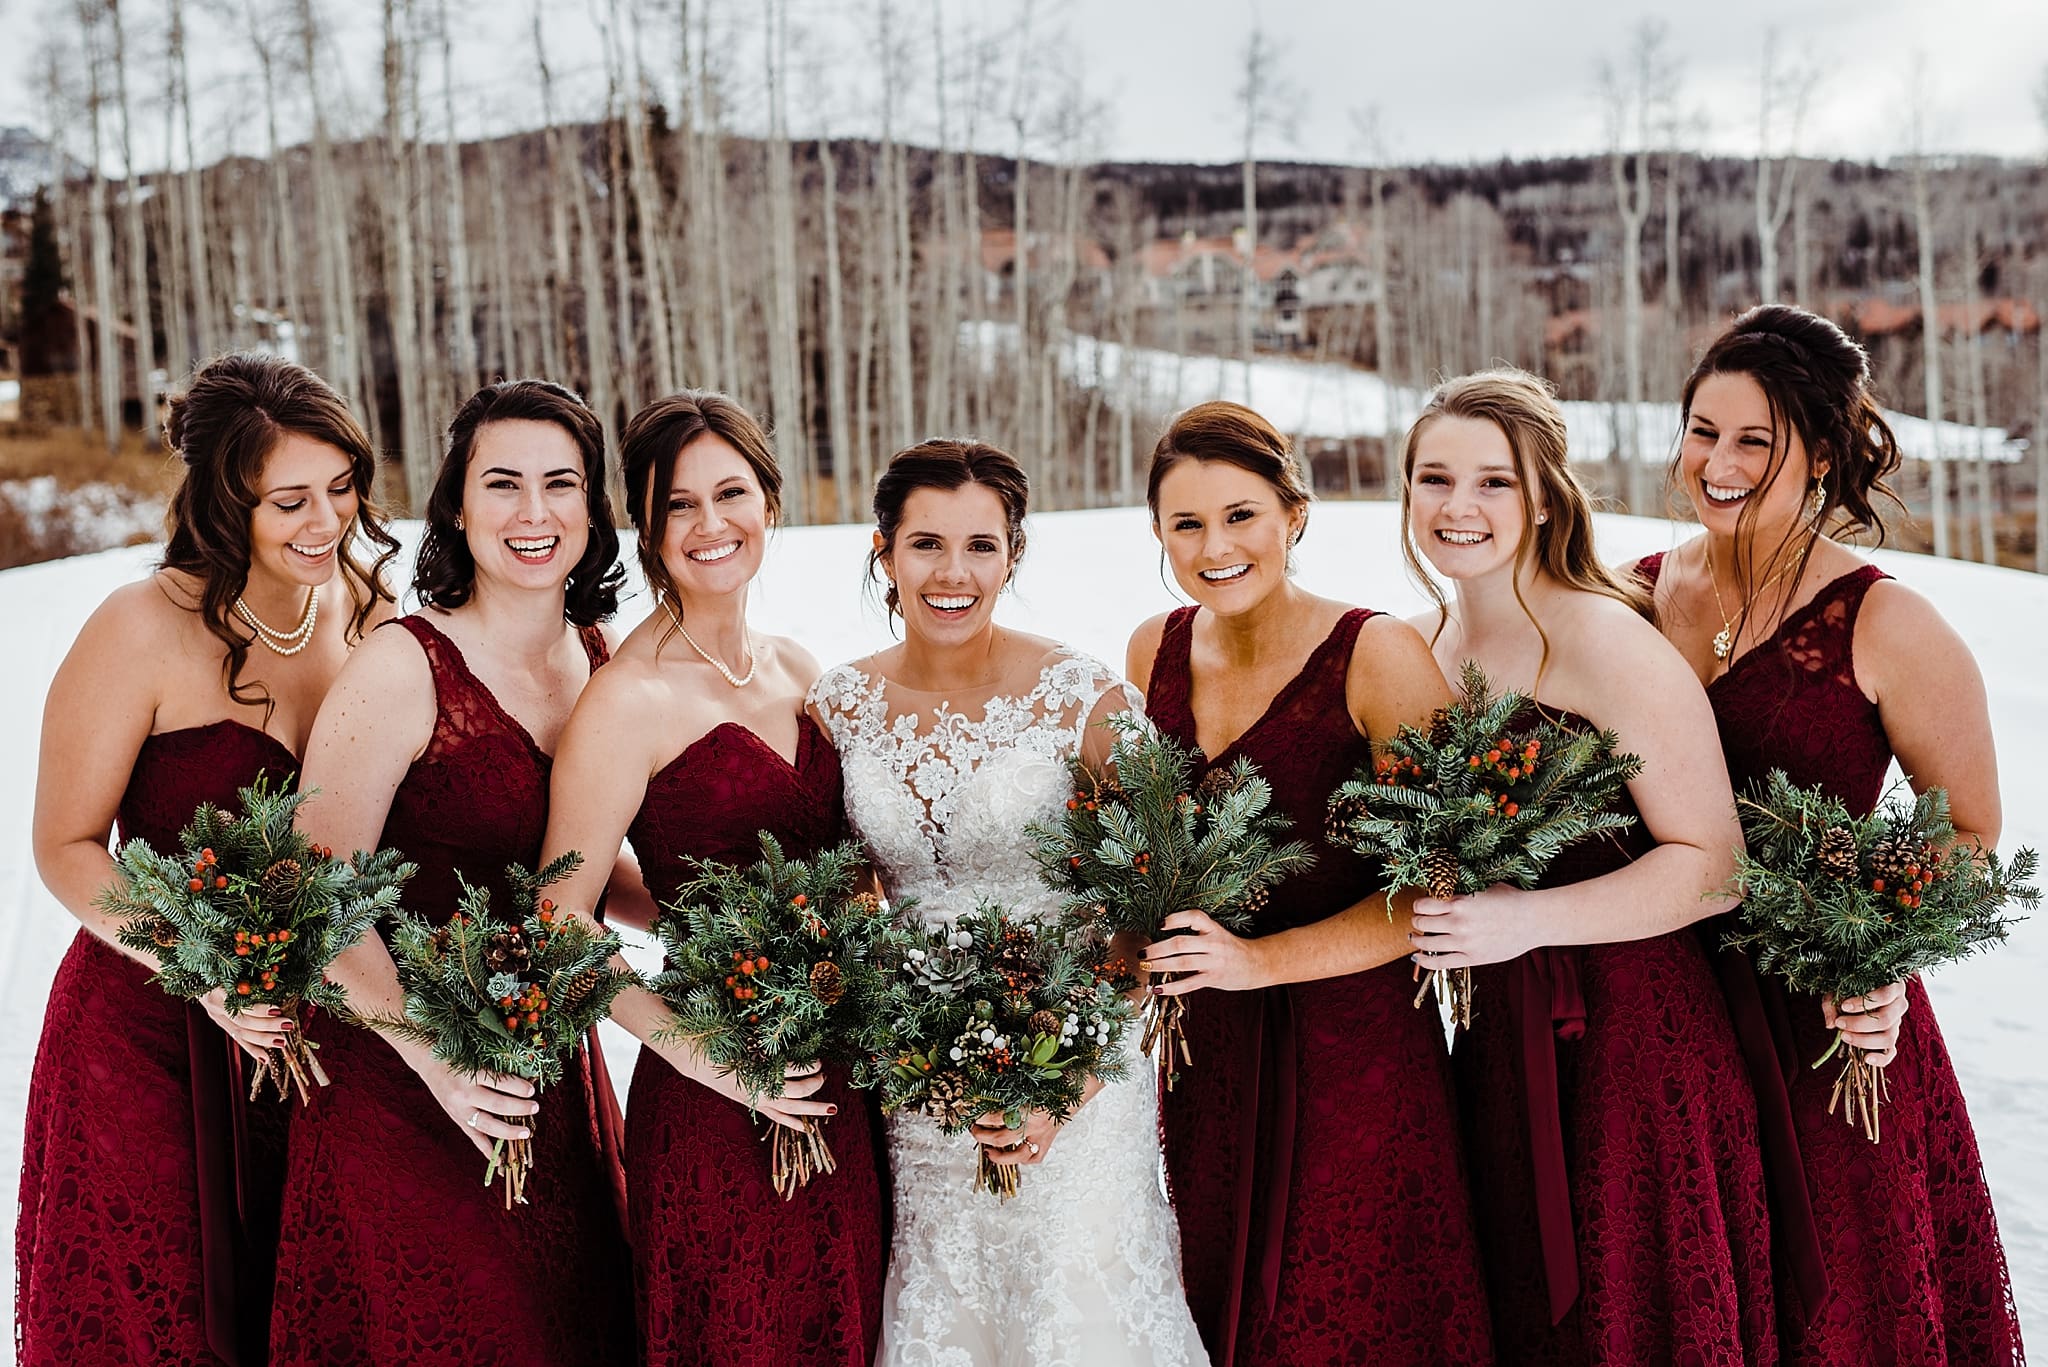 cranberry bridesmaids dresses for winter wedding